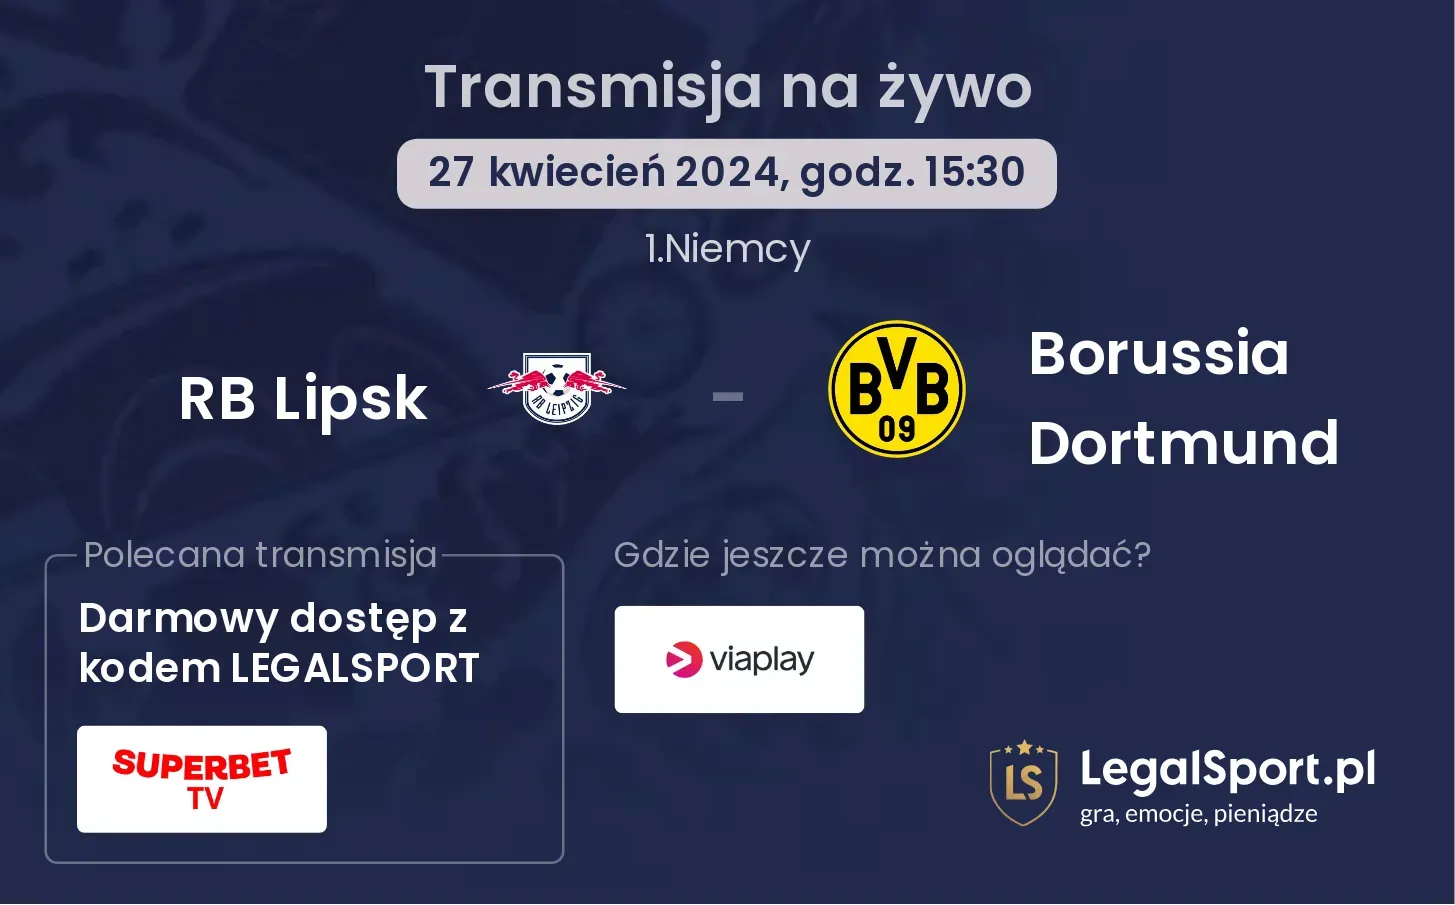 RB Lipsk - Borussia Dortmund transmisja na żywo